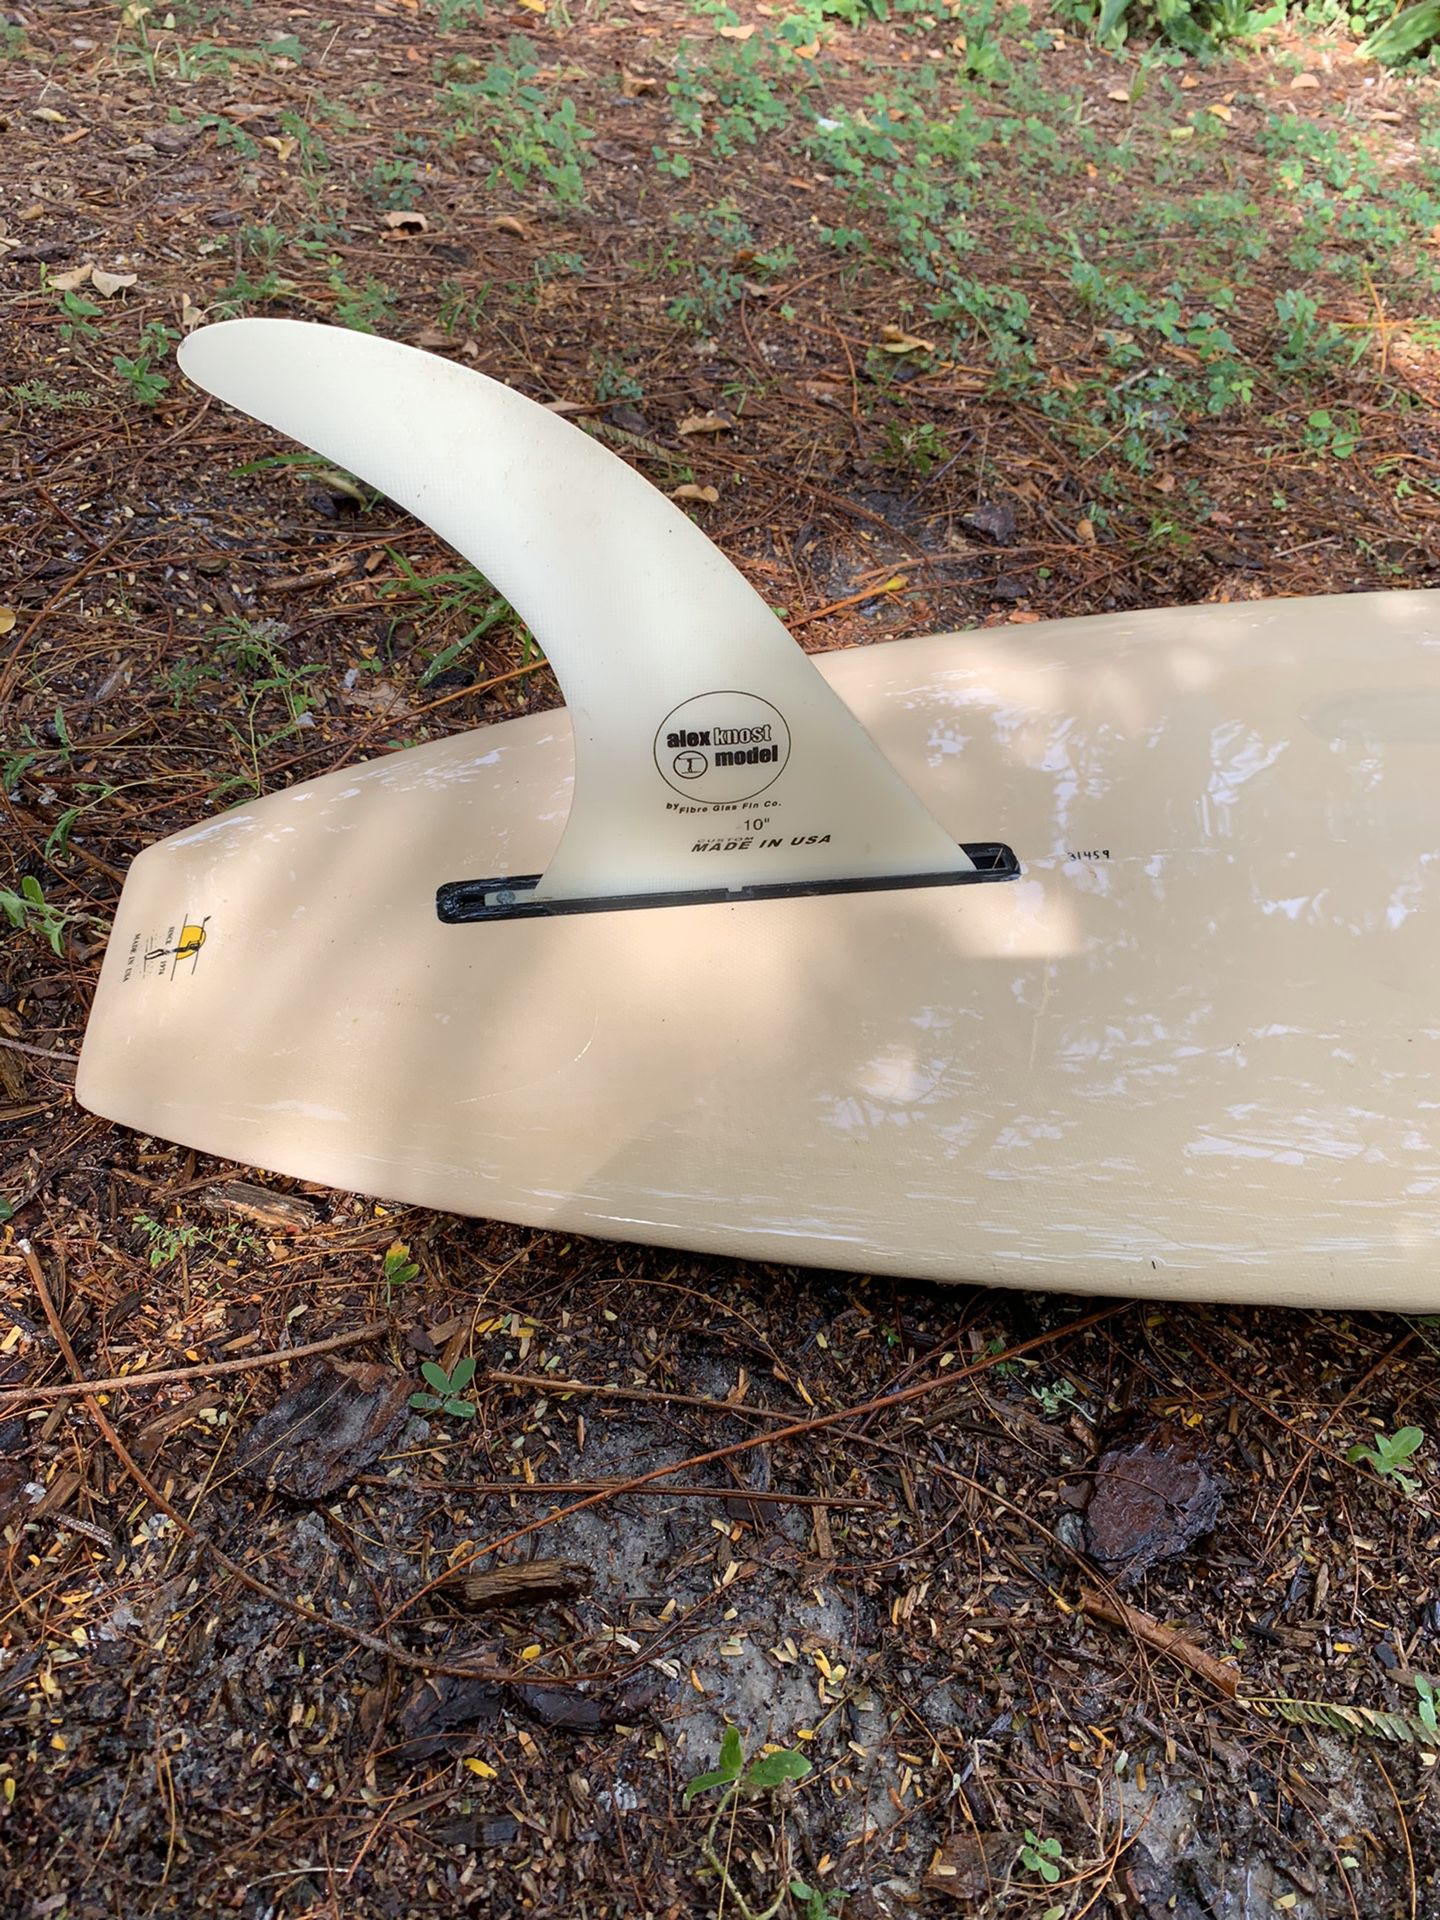 9'6” Robert August Alex Knost model longboard for Sale in Lake